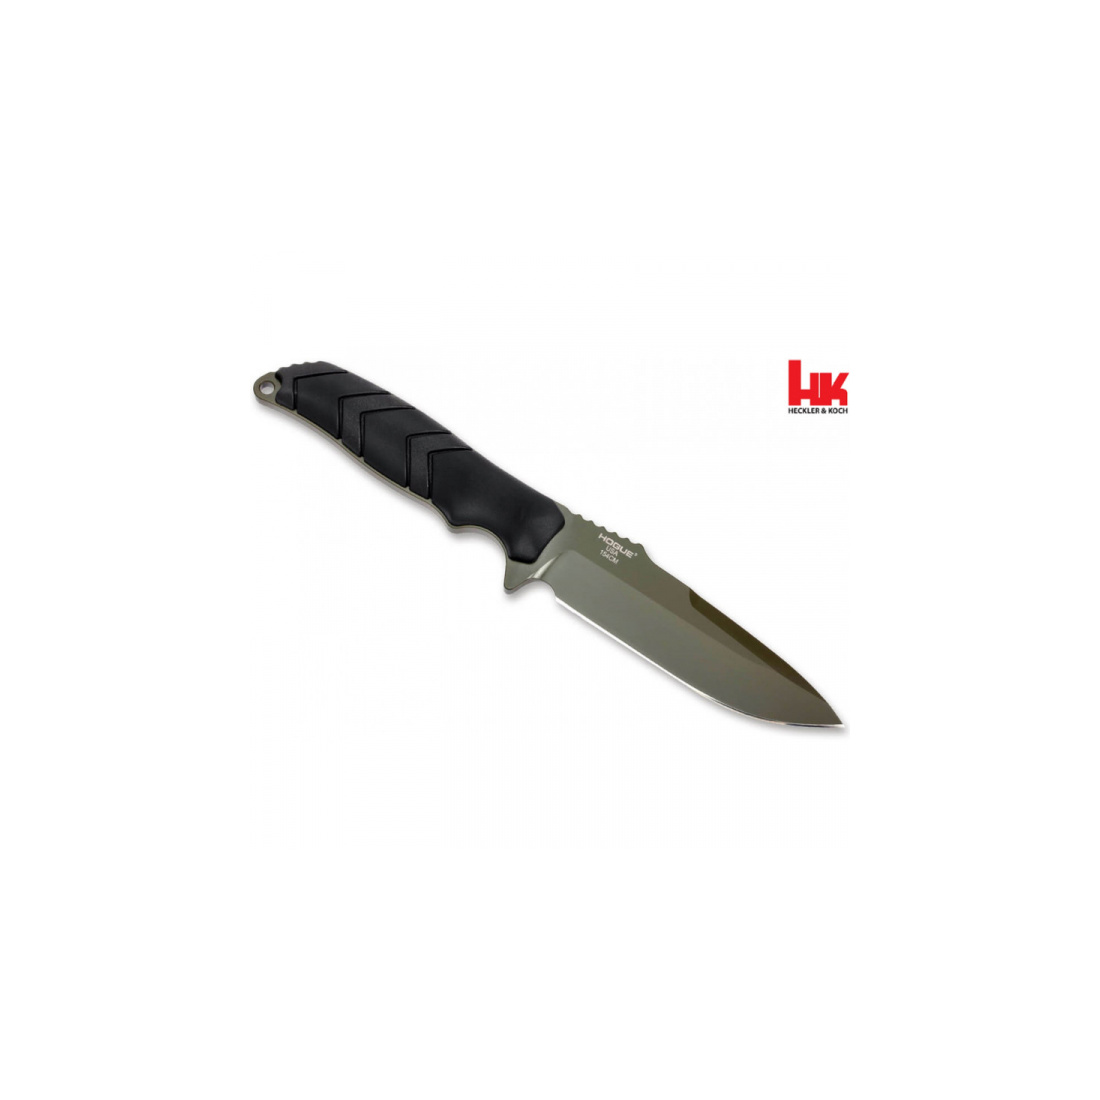 Einsatzmesser Heckler & Koch HK Fray 4.2" Clippoint OD Green Cerakote